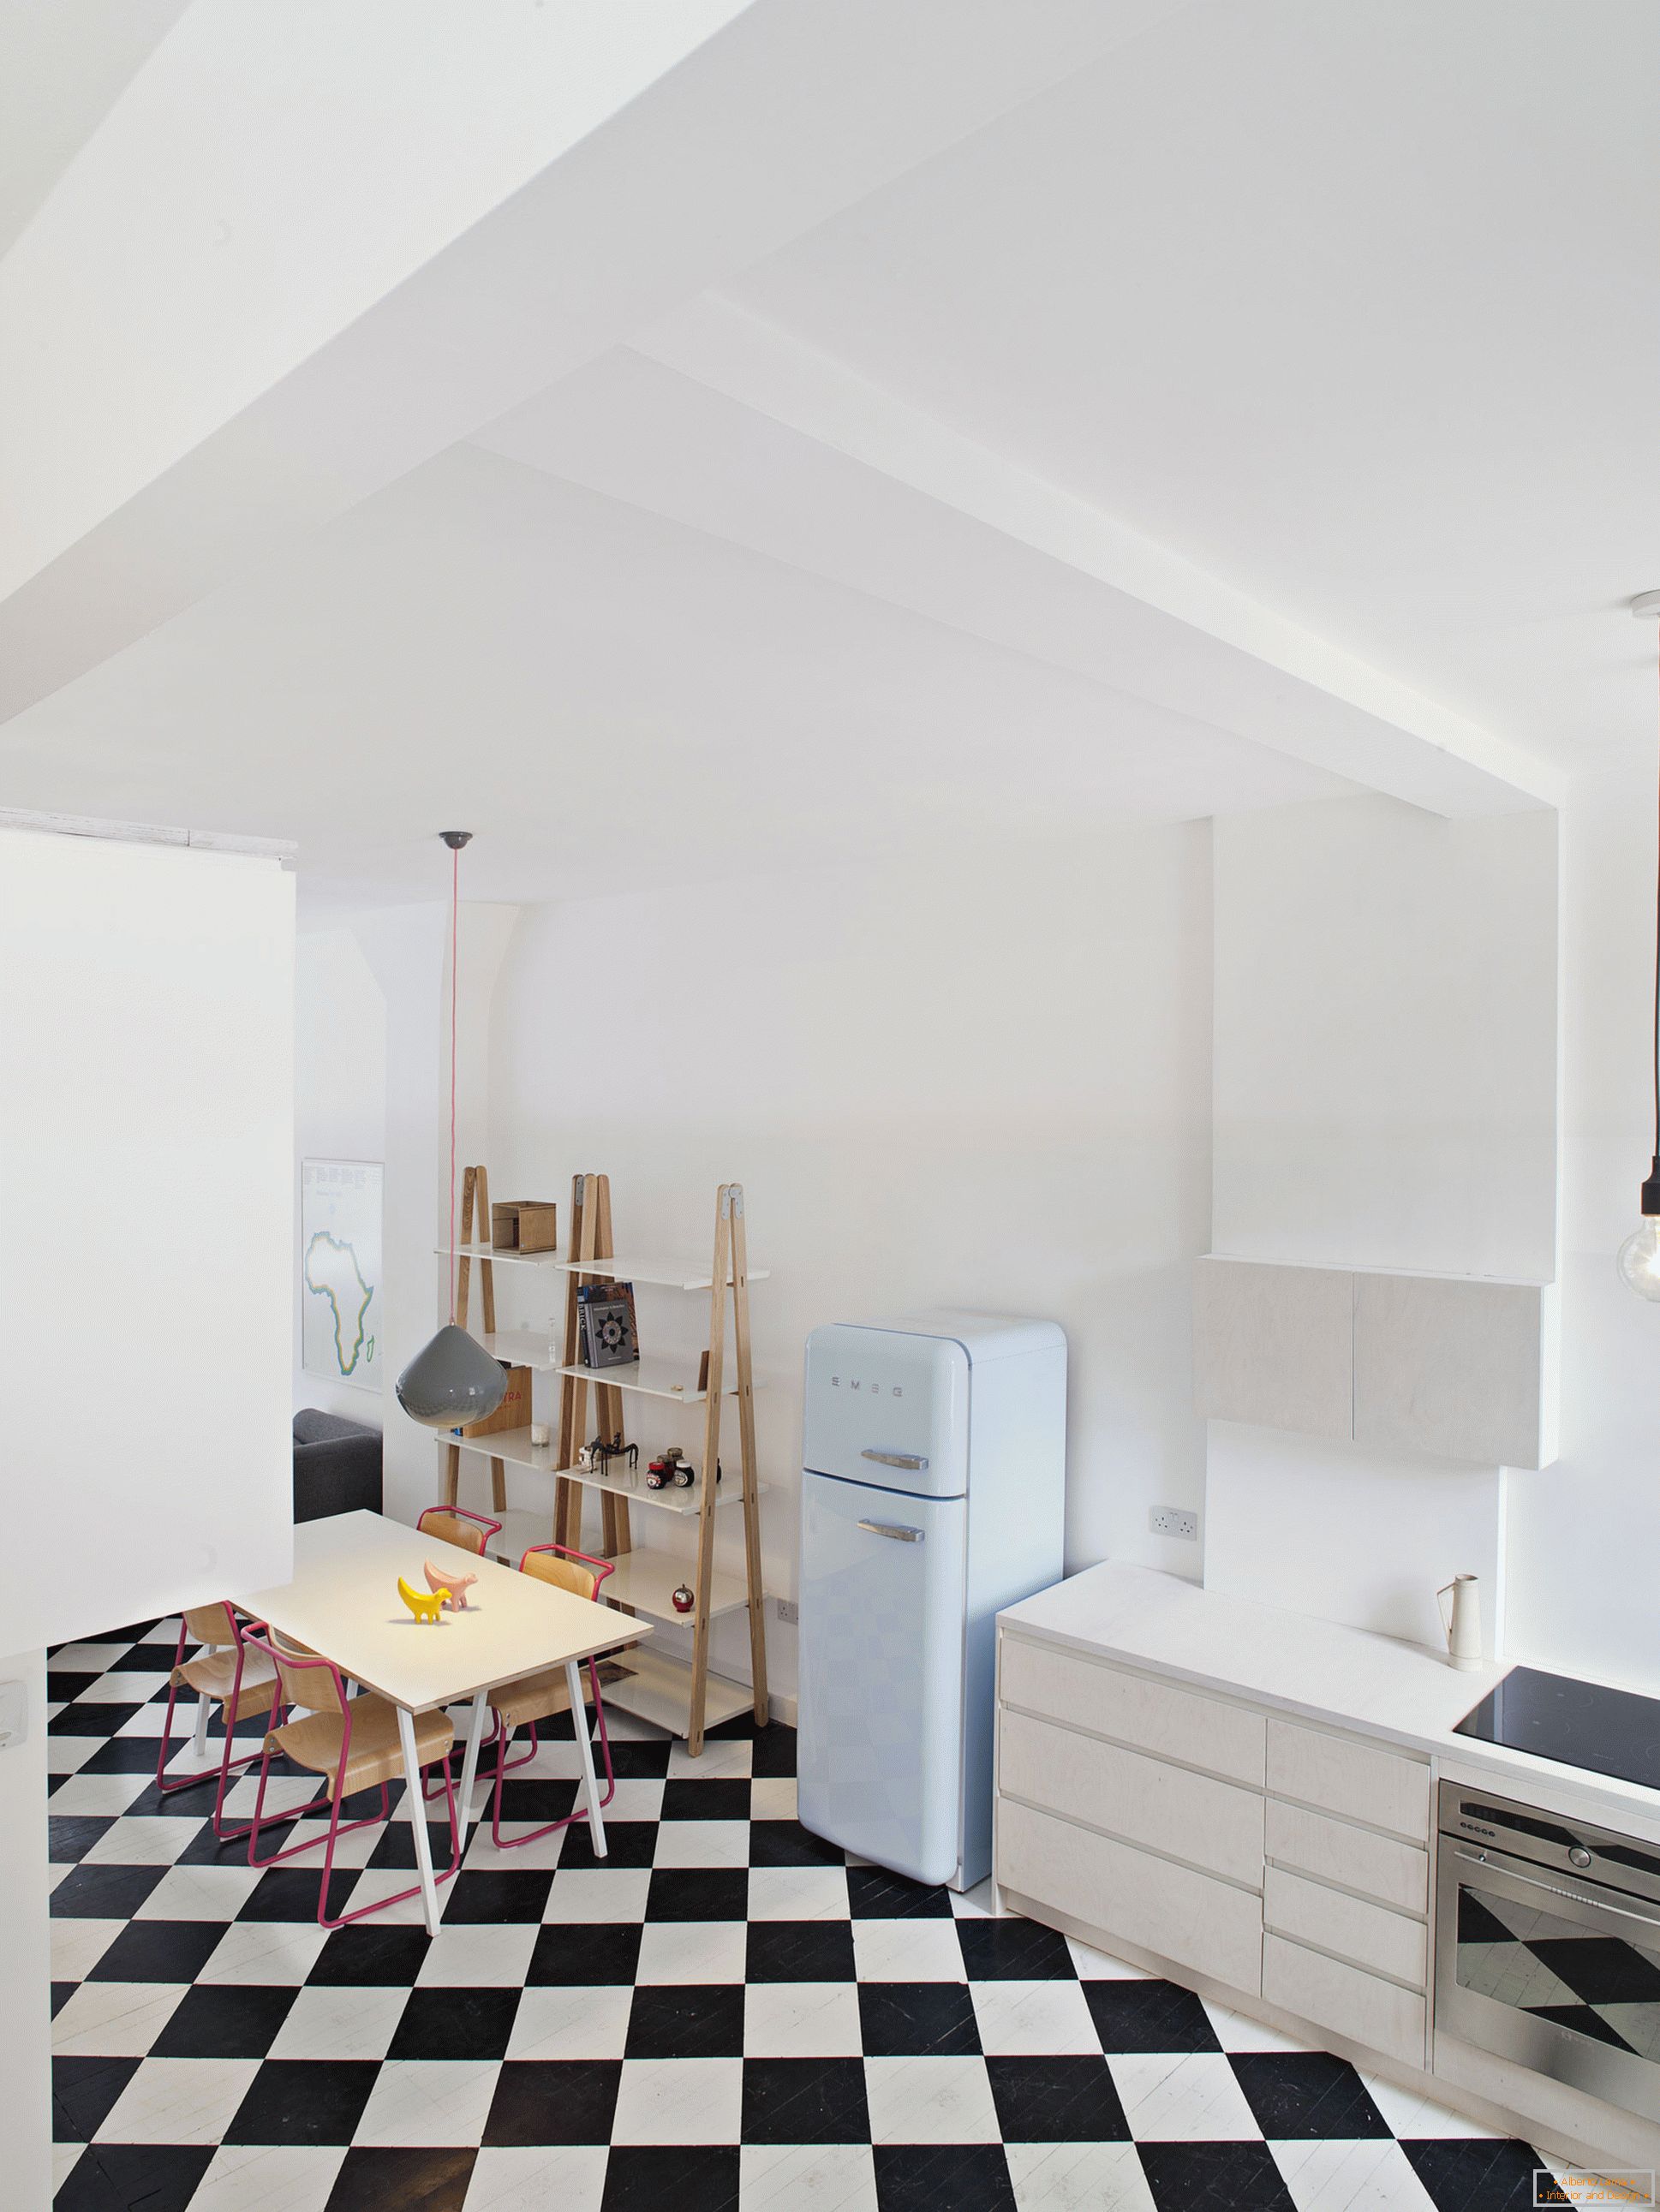 City View House - Bäckerei, in ein Studio-Apartment umgewandelt, London, UK